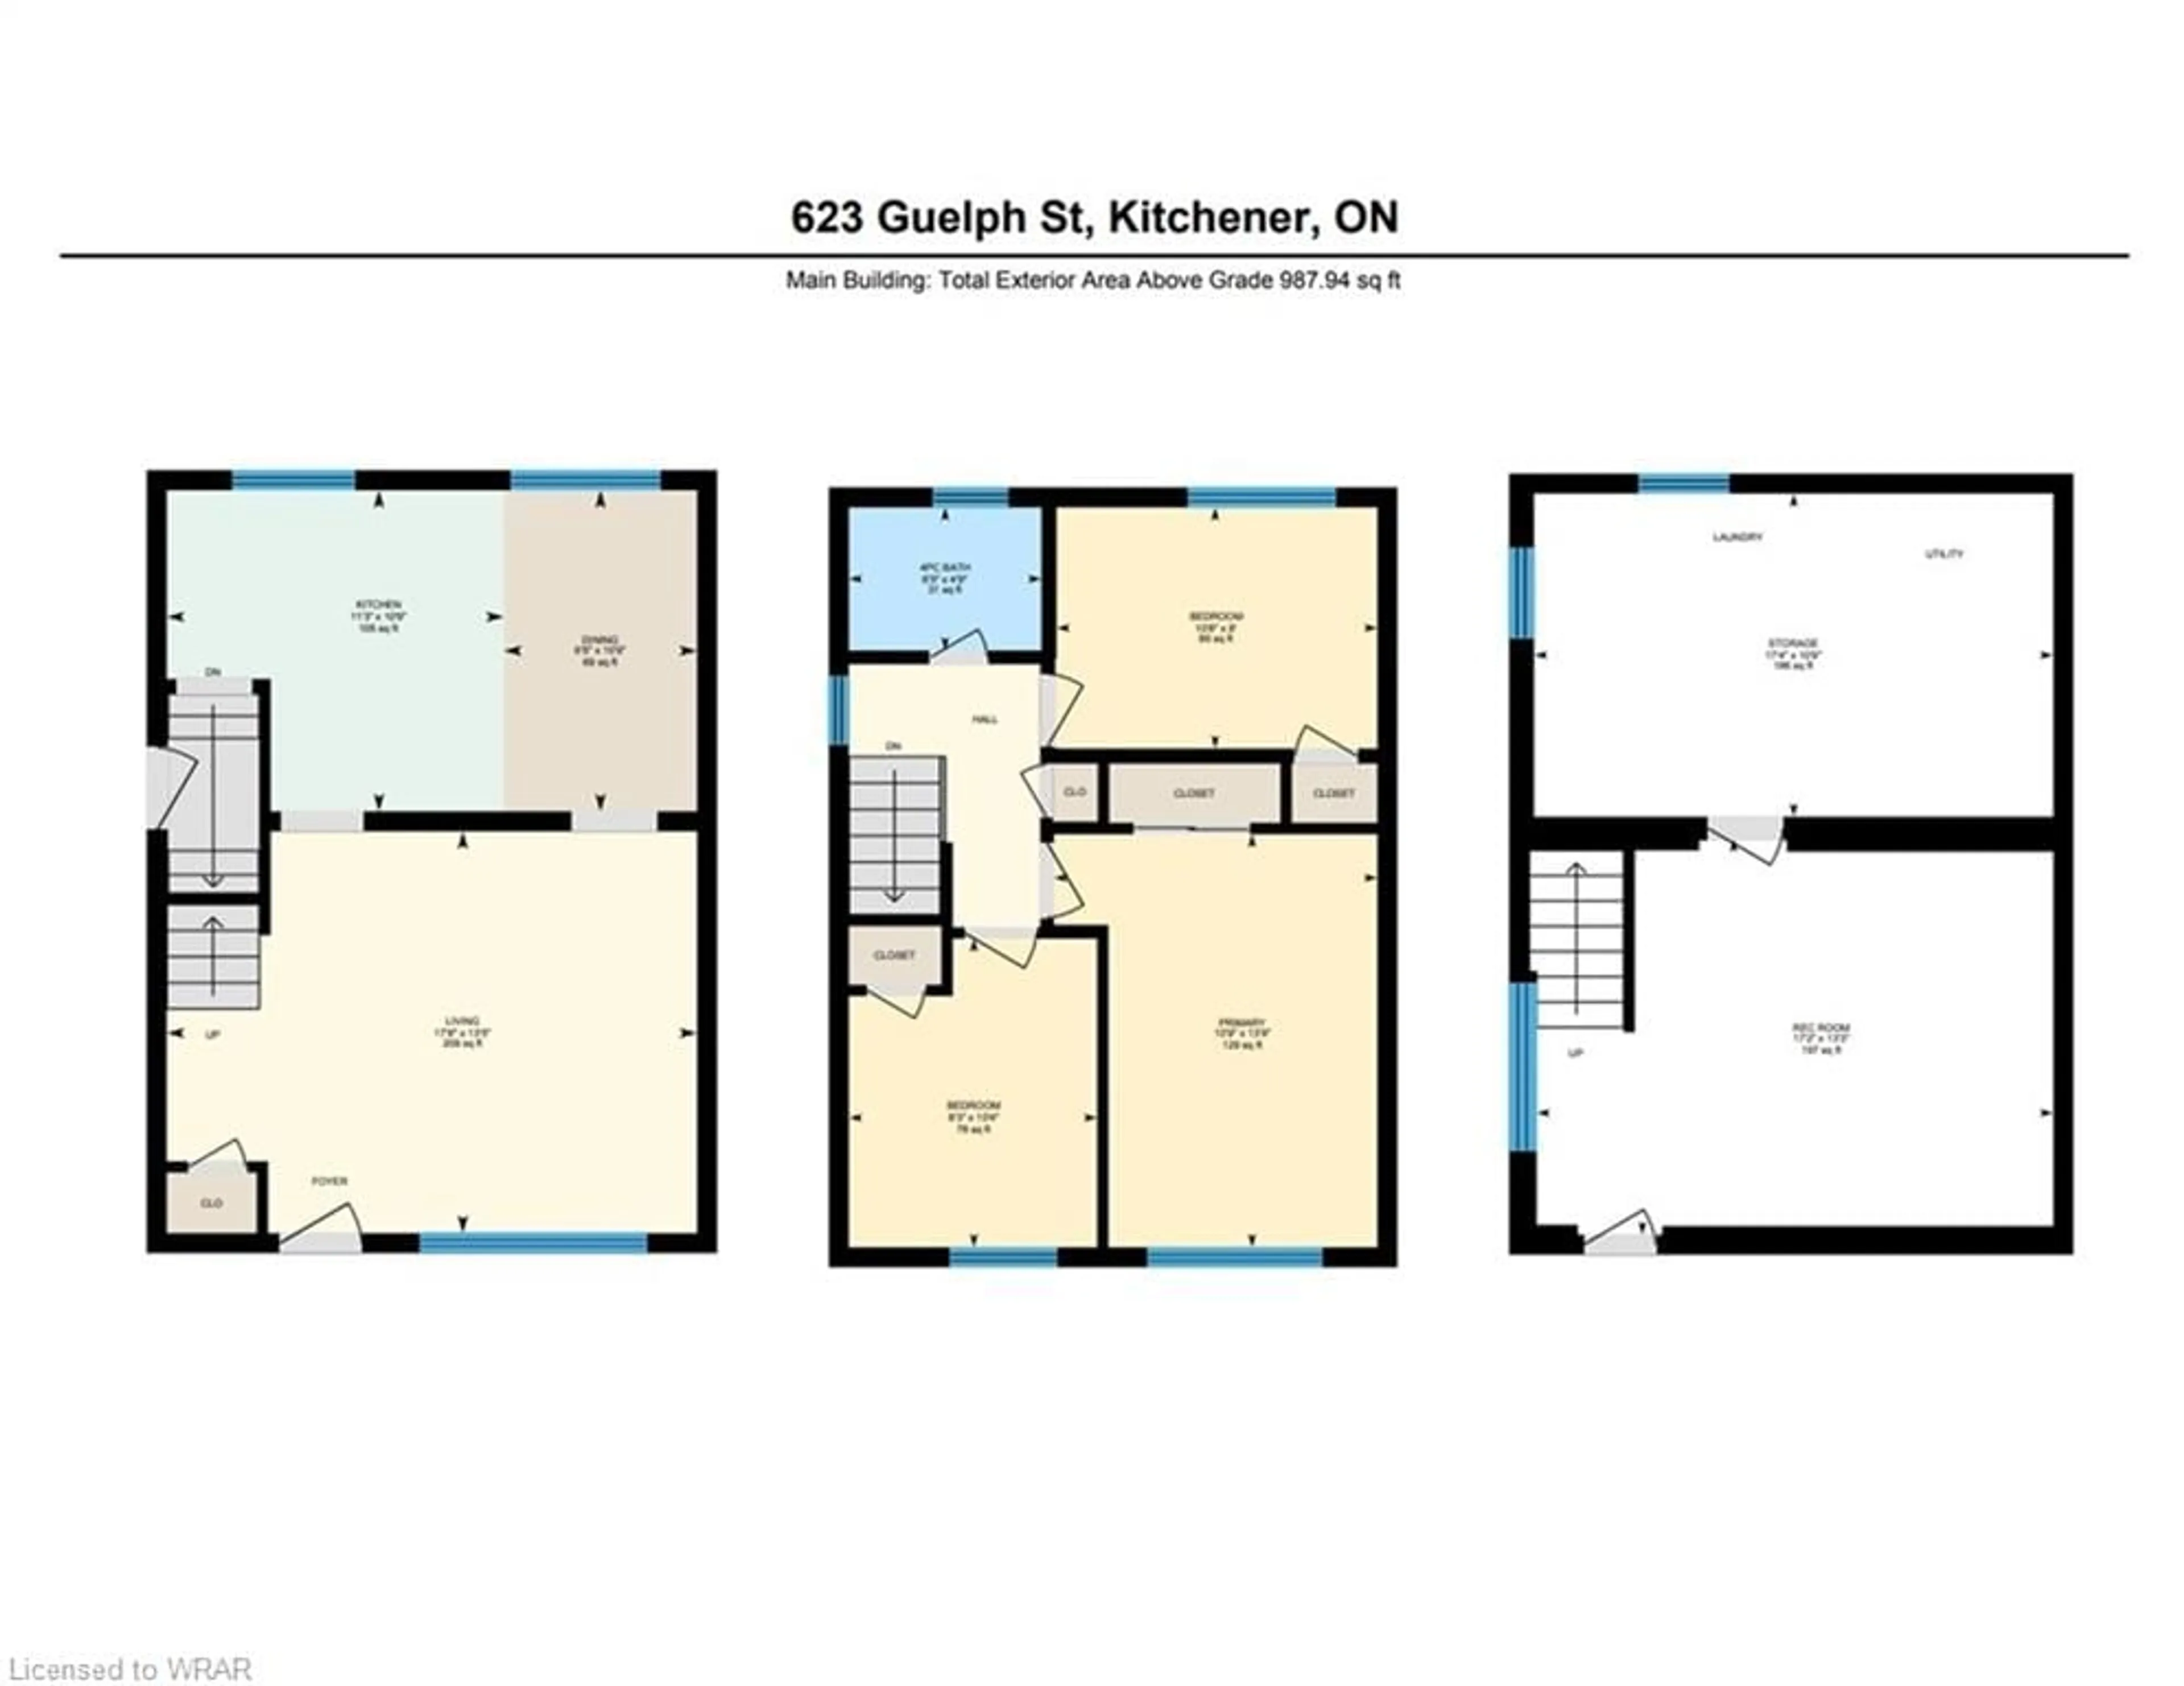 Floor plan for 623 Guelph St, Kitchener Ontario N2H 5Y5